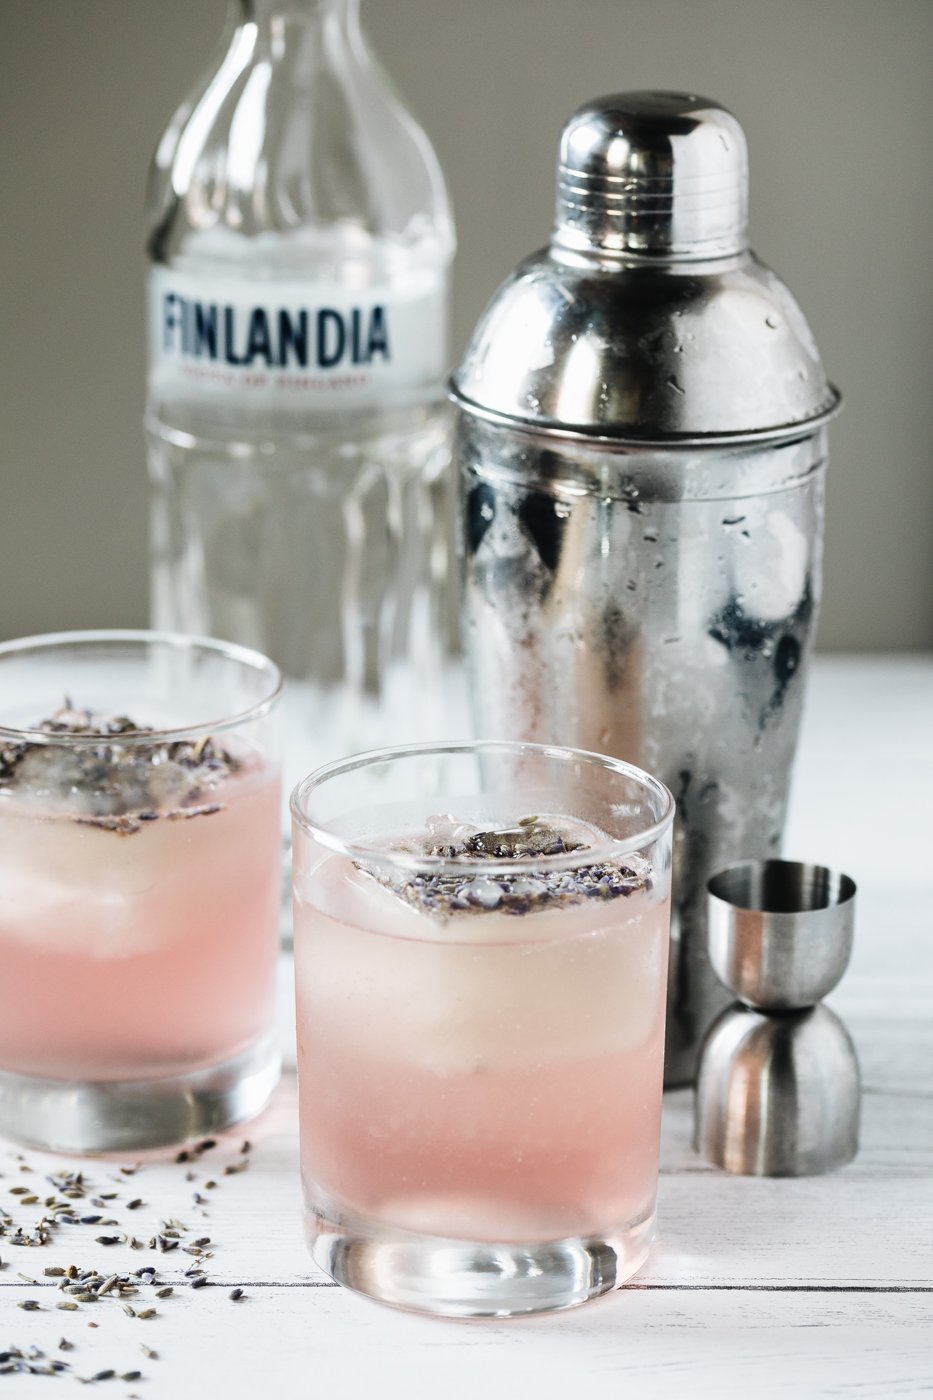 vodka cocktails, finlandia vodka, lavender simple syrup, lavender cocktails, the kentucky gent